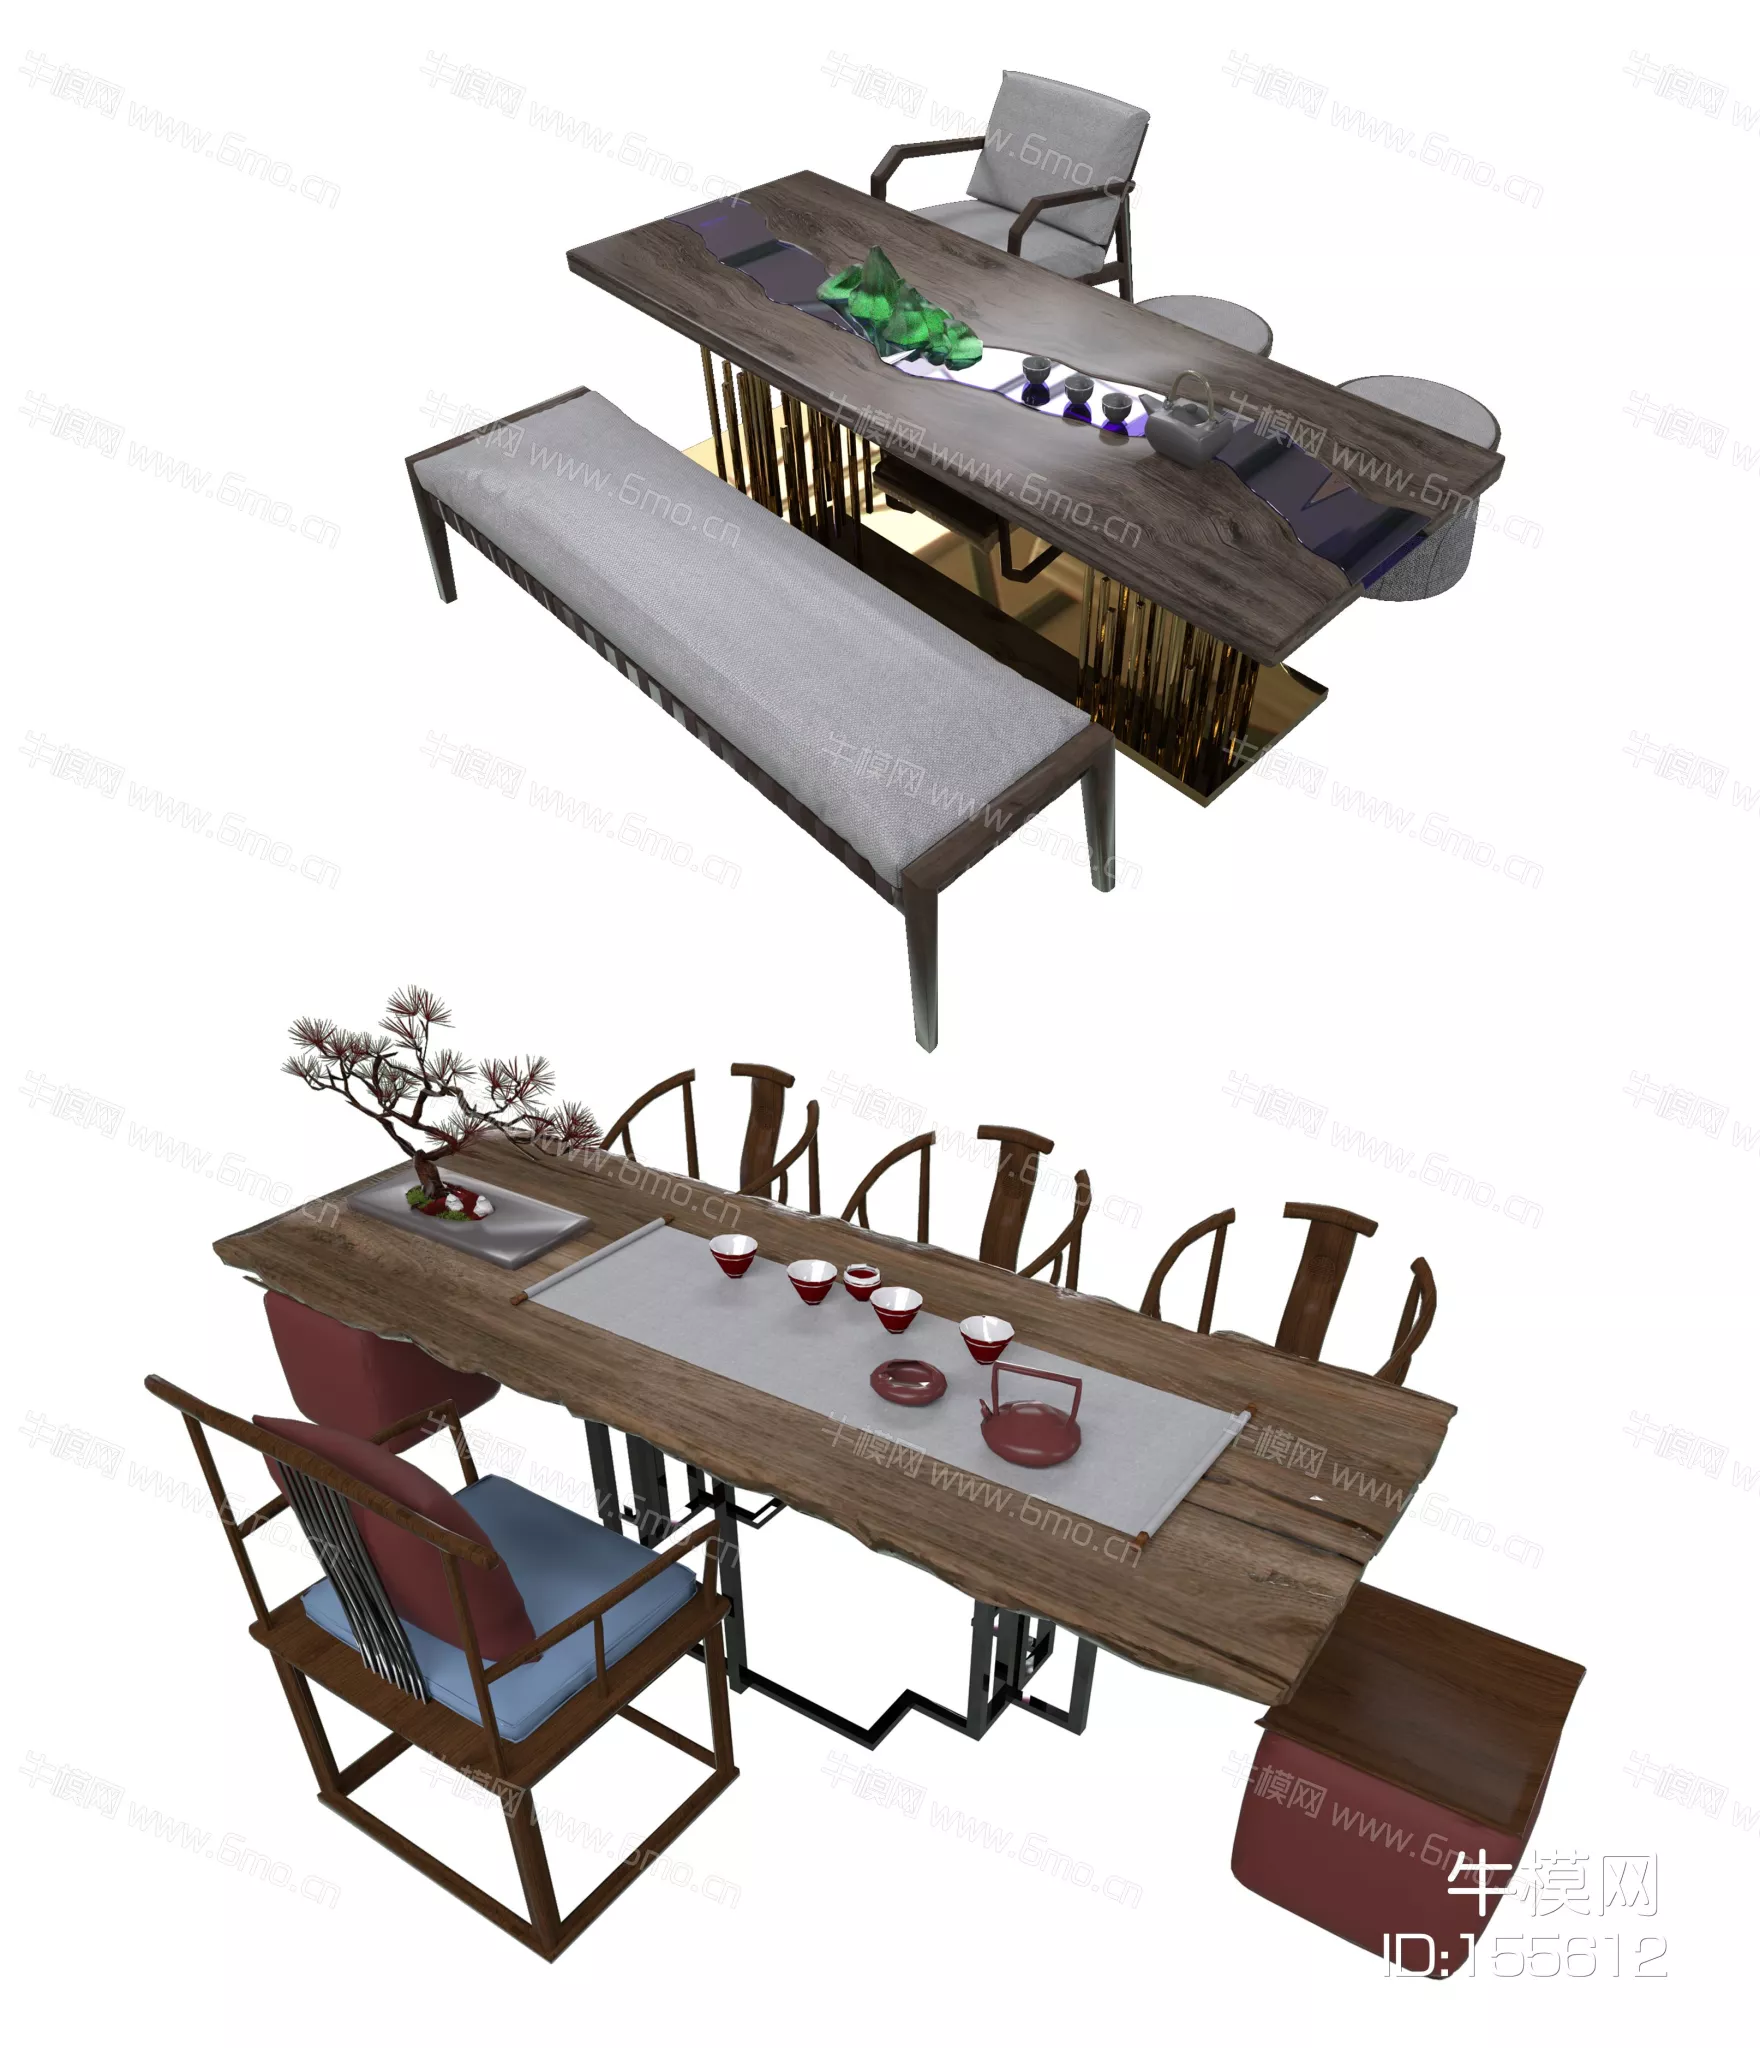 CHINESE TEA TABLE SET - SKETCHUP 3D MODEL - ENSCAPE - 155612